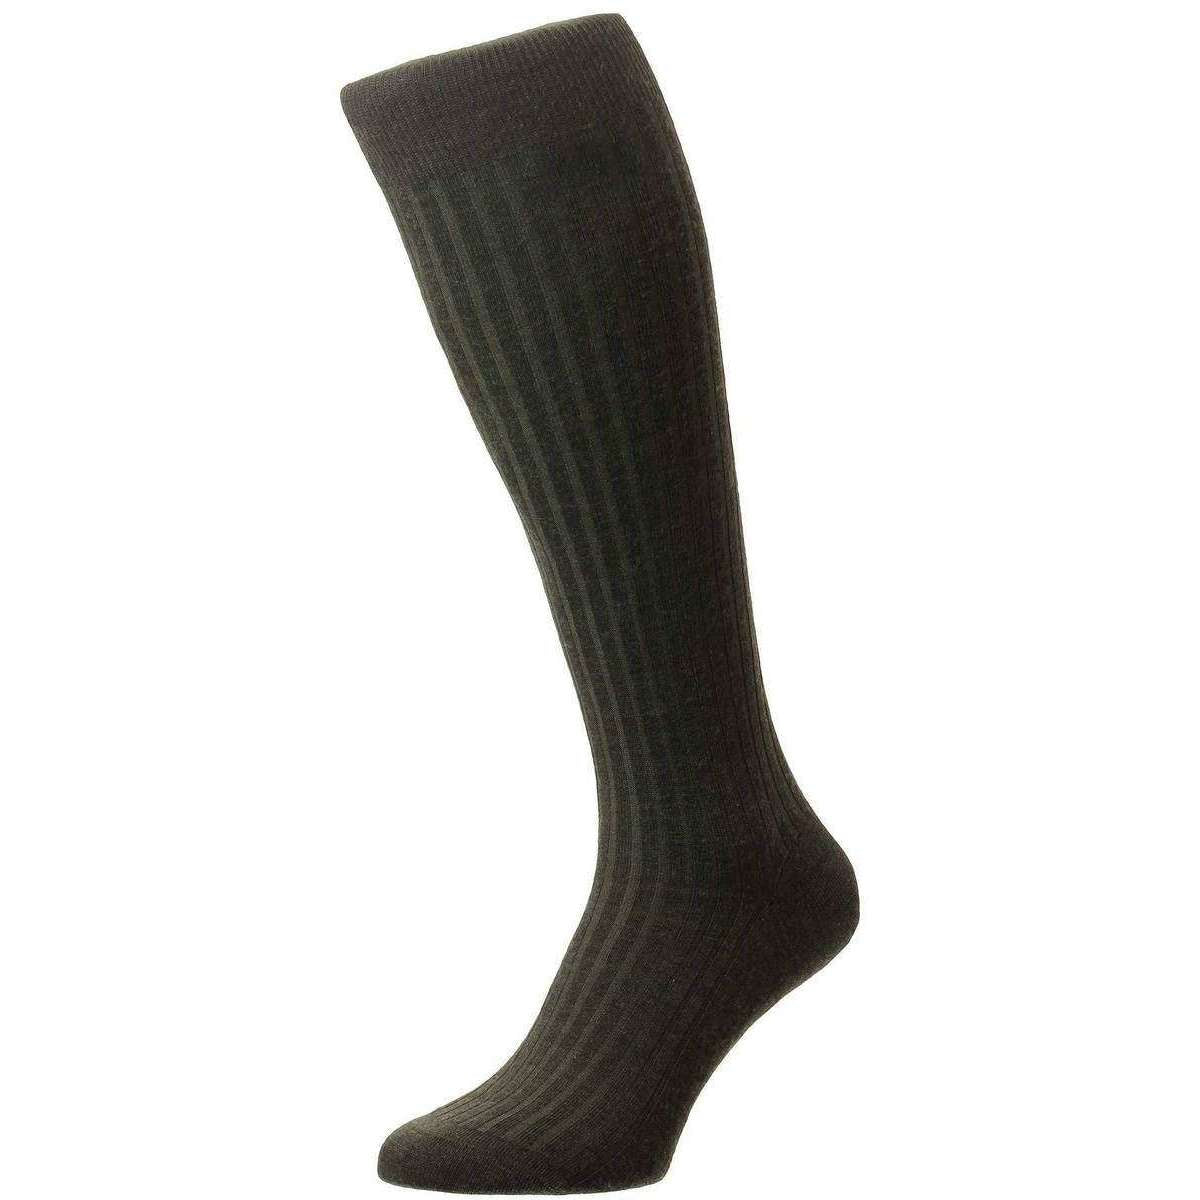 Pantherella Laburnum Merino Wool Over the Calf Socks - Dark Olive Mix